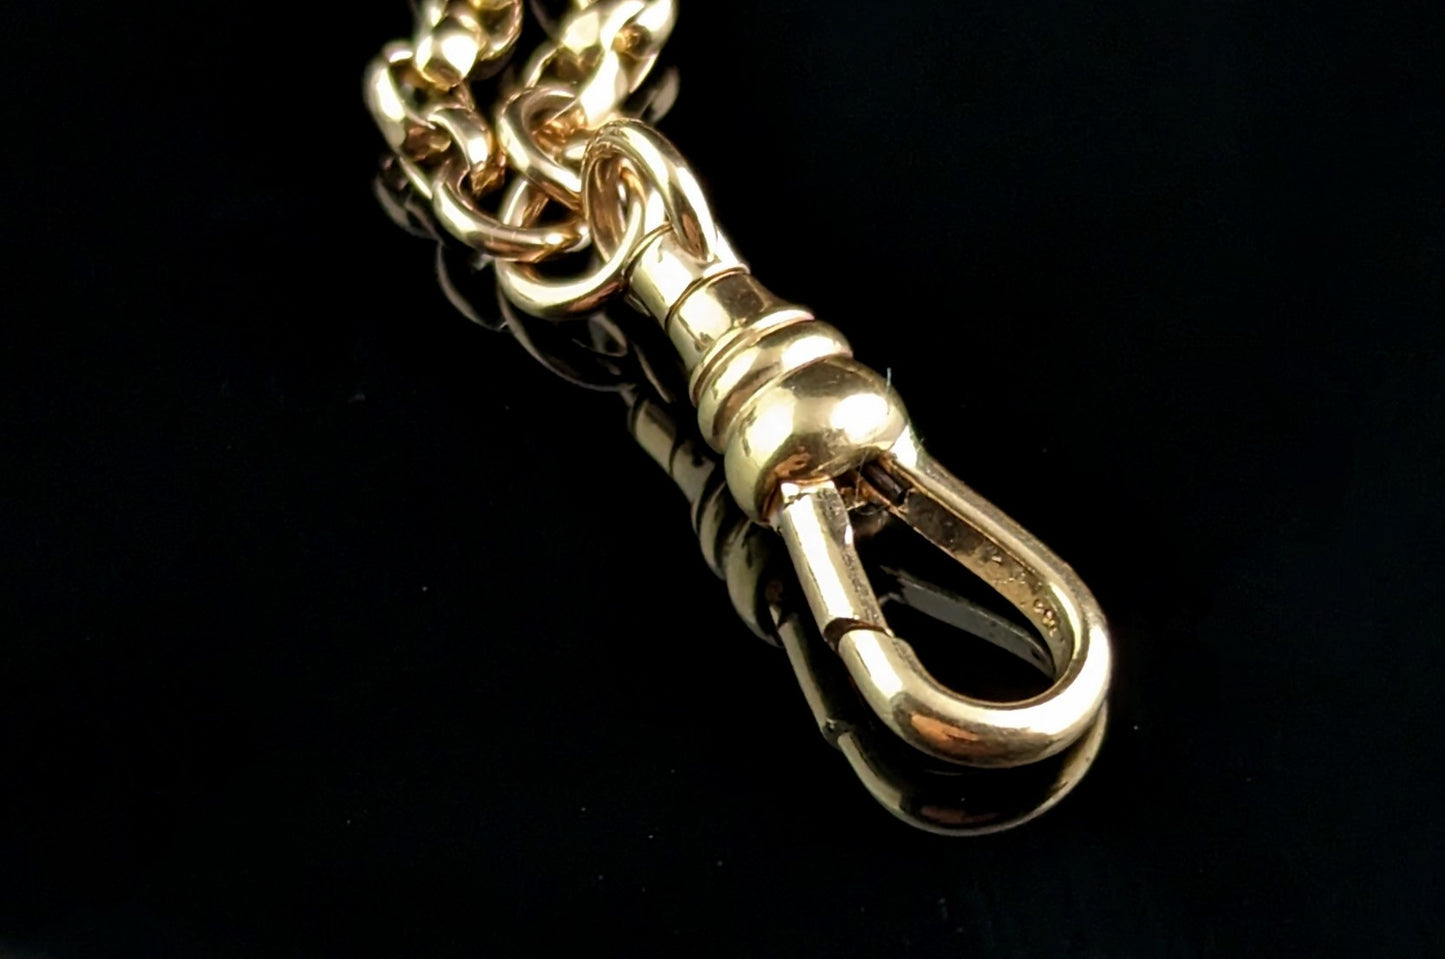 Antique 9ct gold fancy link long chain, longuard chain, Victorian